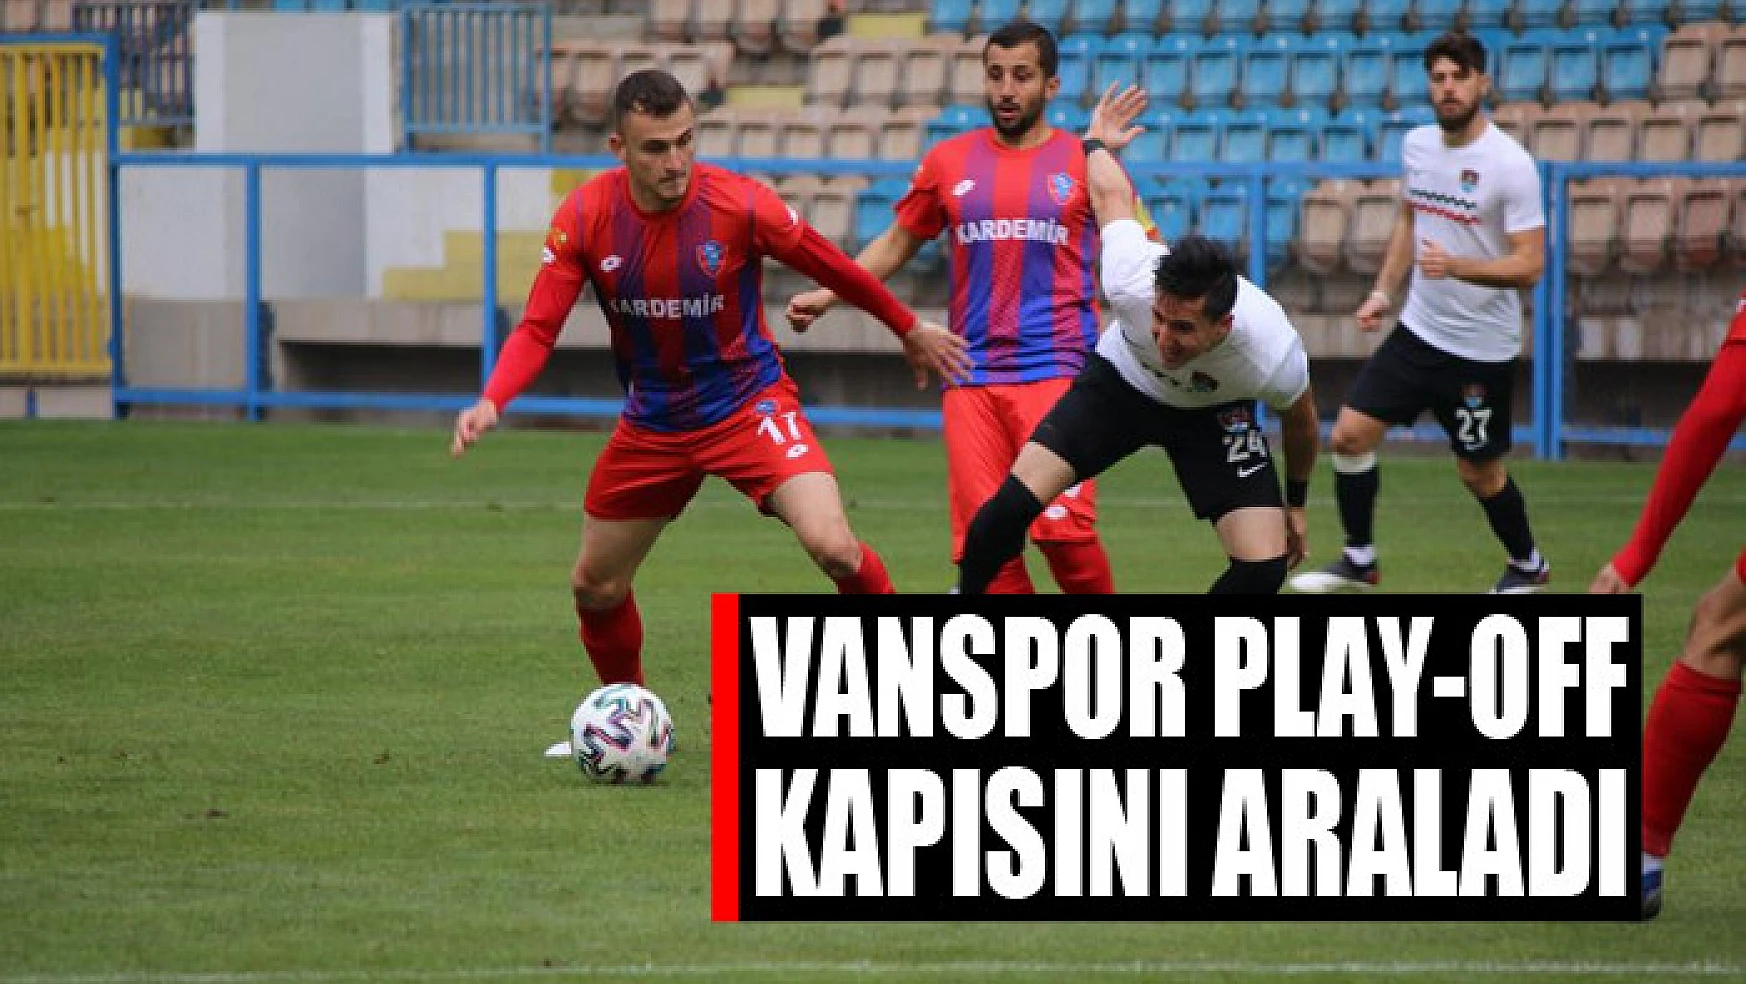 VANSPOR PLAY-OFF KAPISINDA